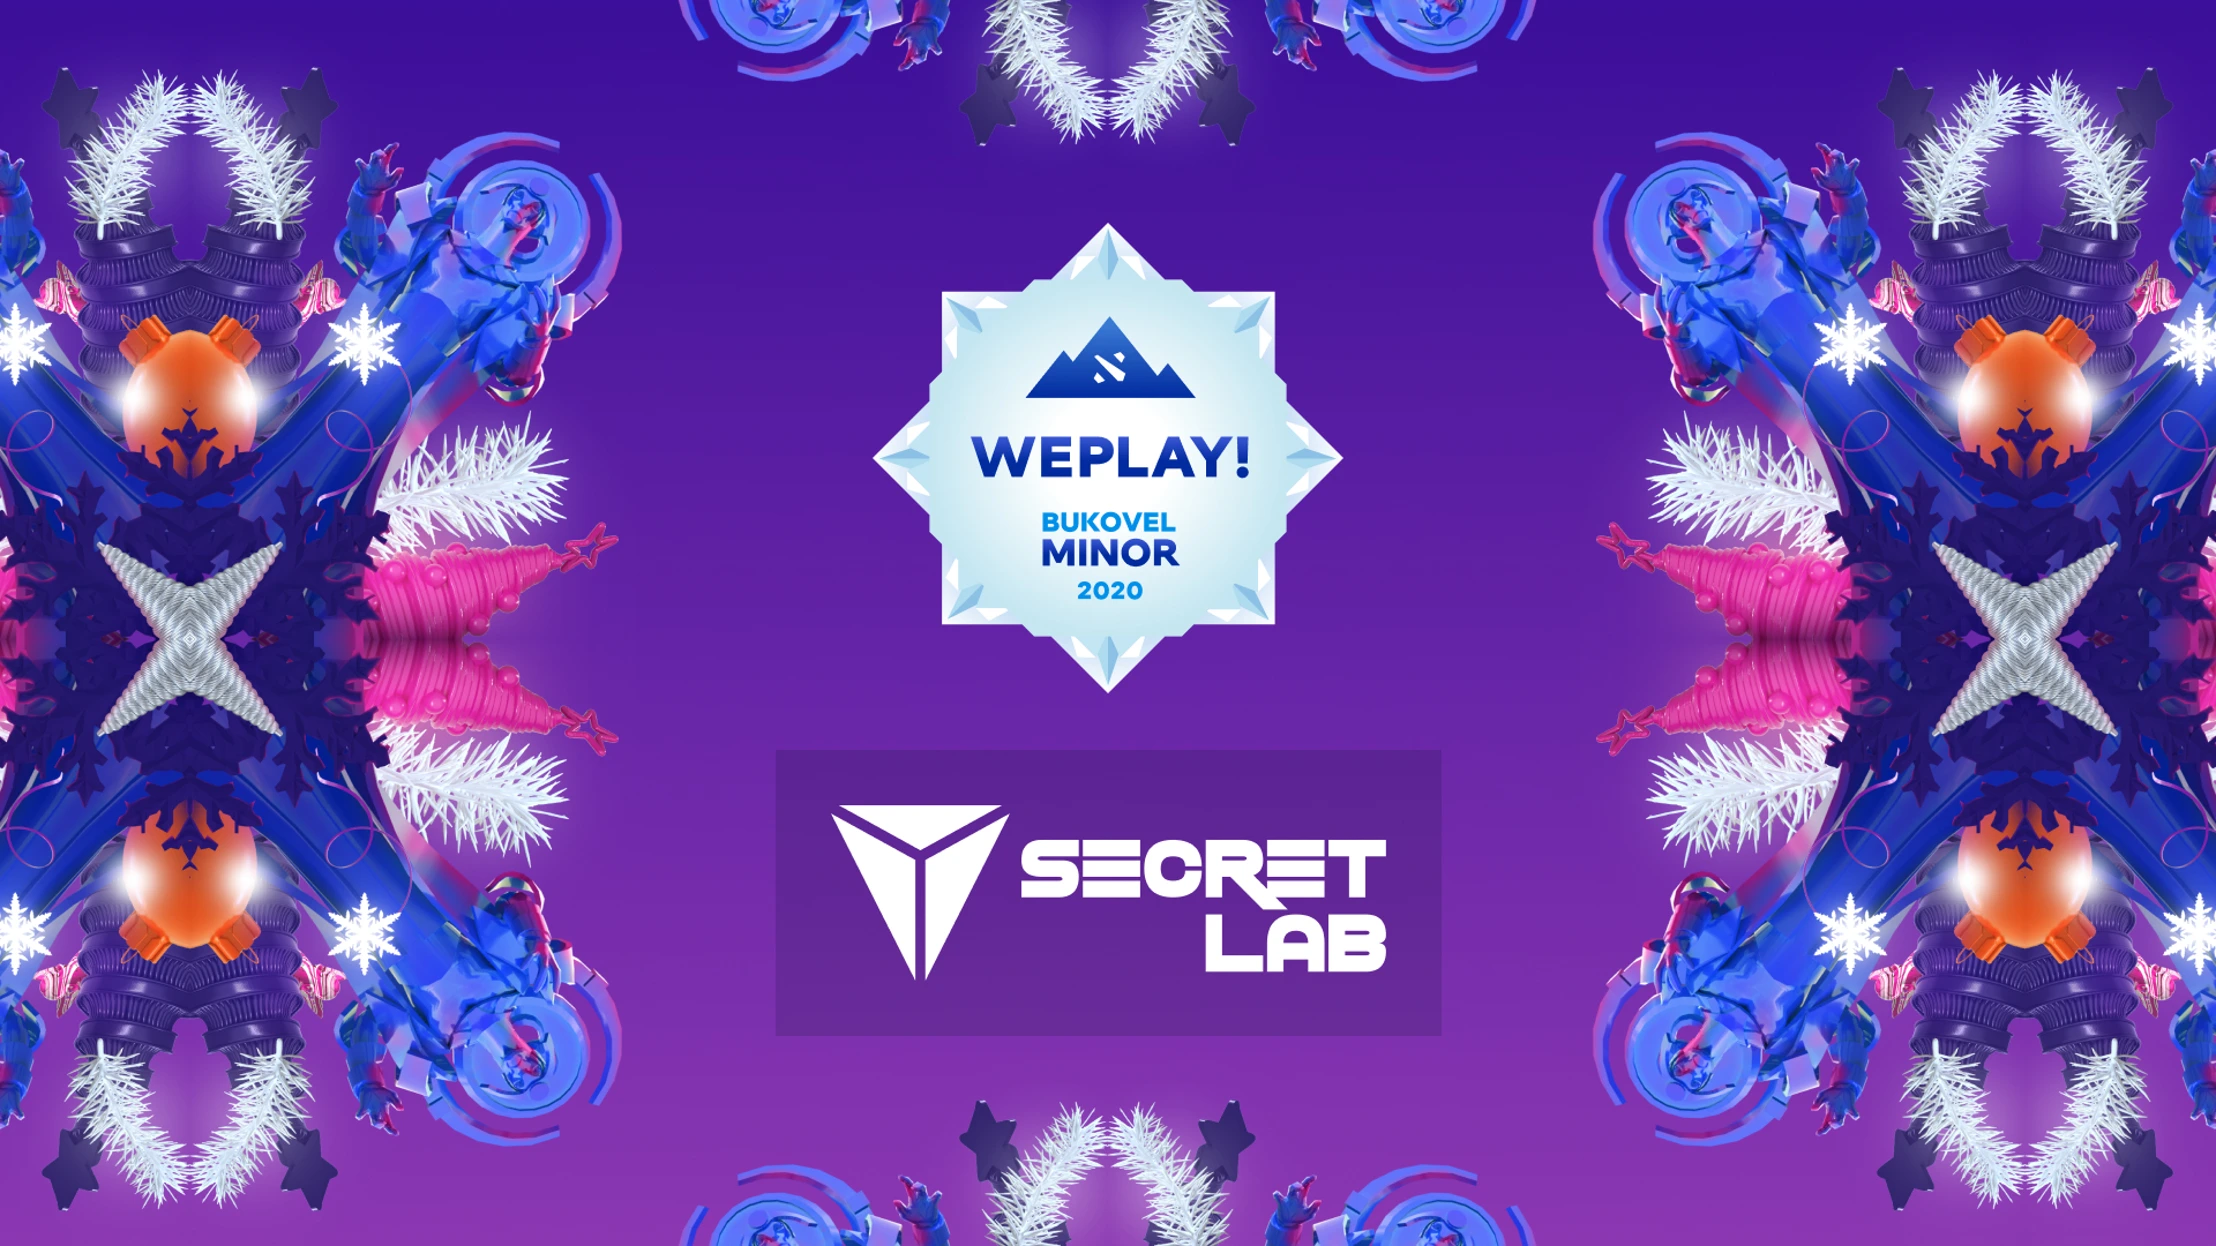 WePlay! Bukovel Minor 2020 объявляет партнерство с Secretlab